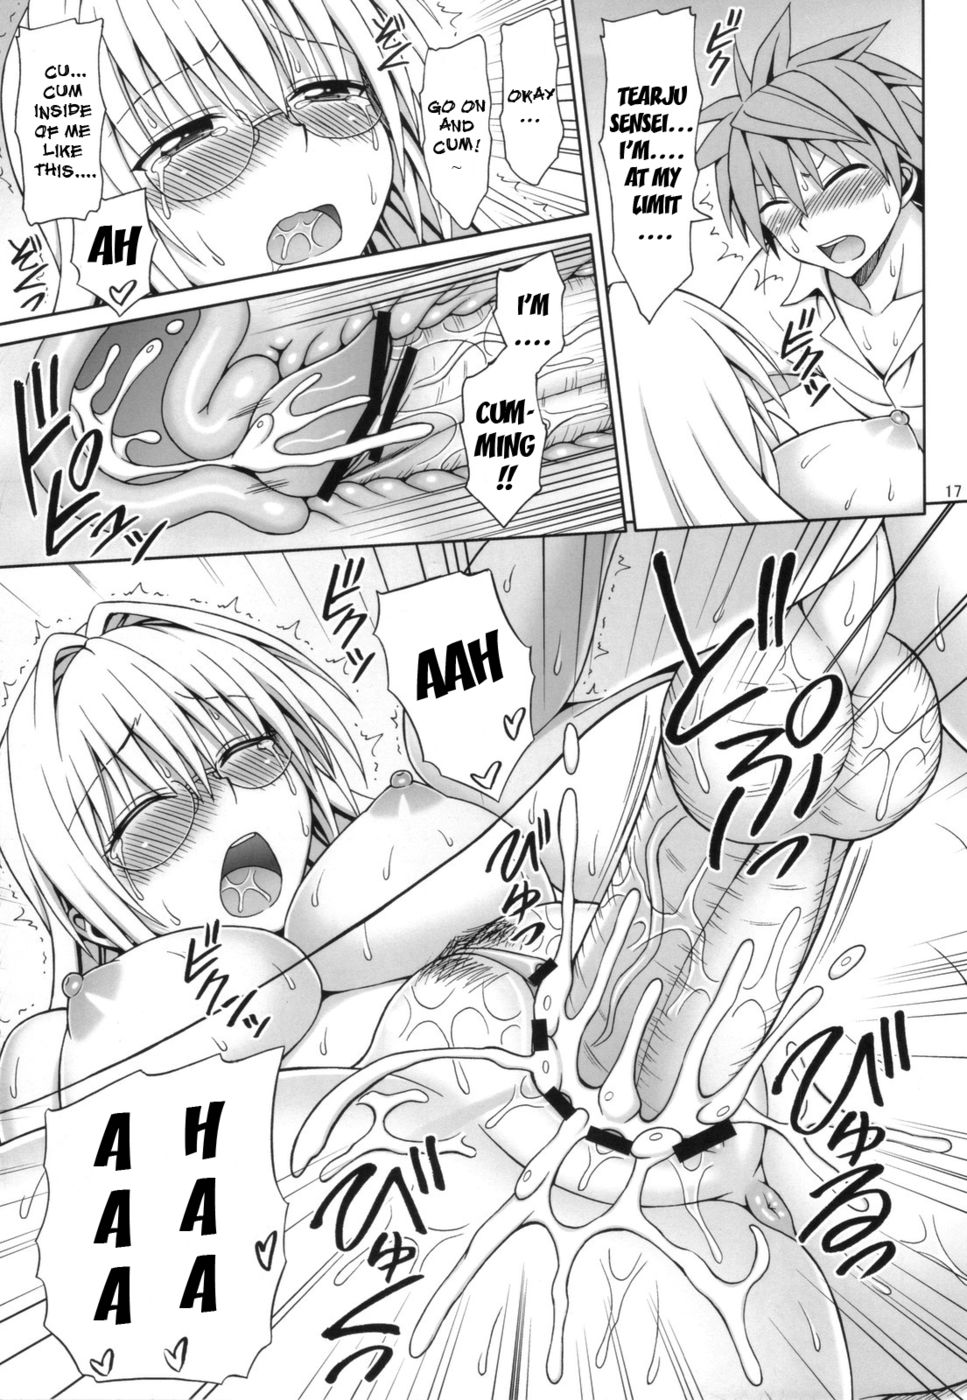 Hentai Manga Comic-Tearju-sensei's After-School Trouble-Read-16